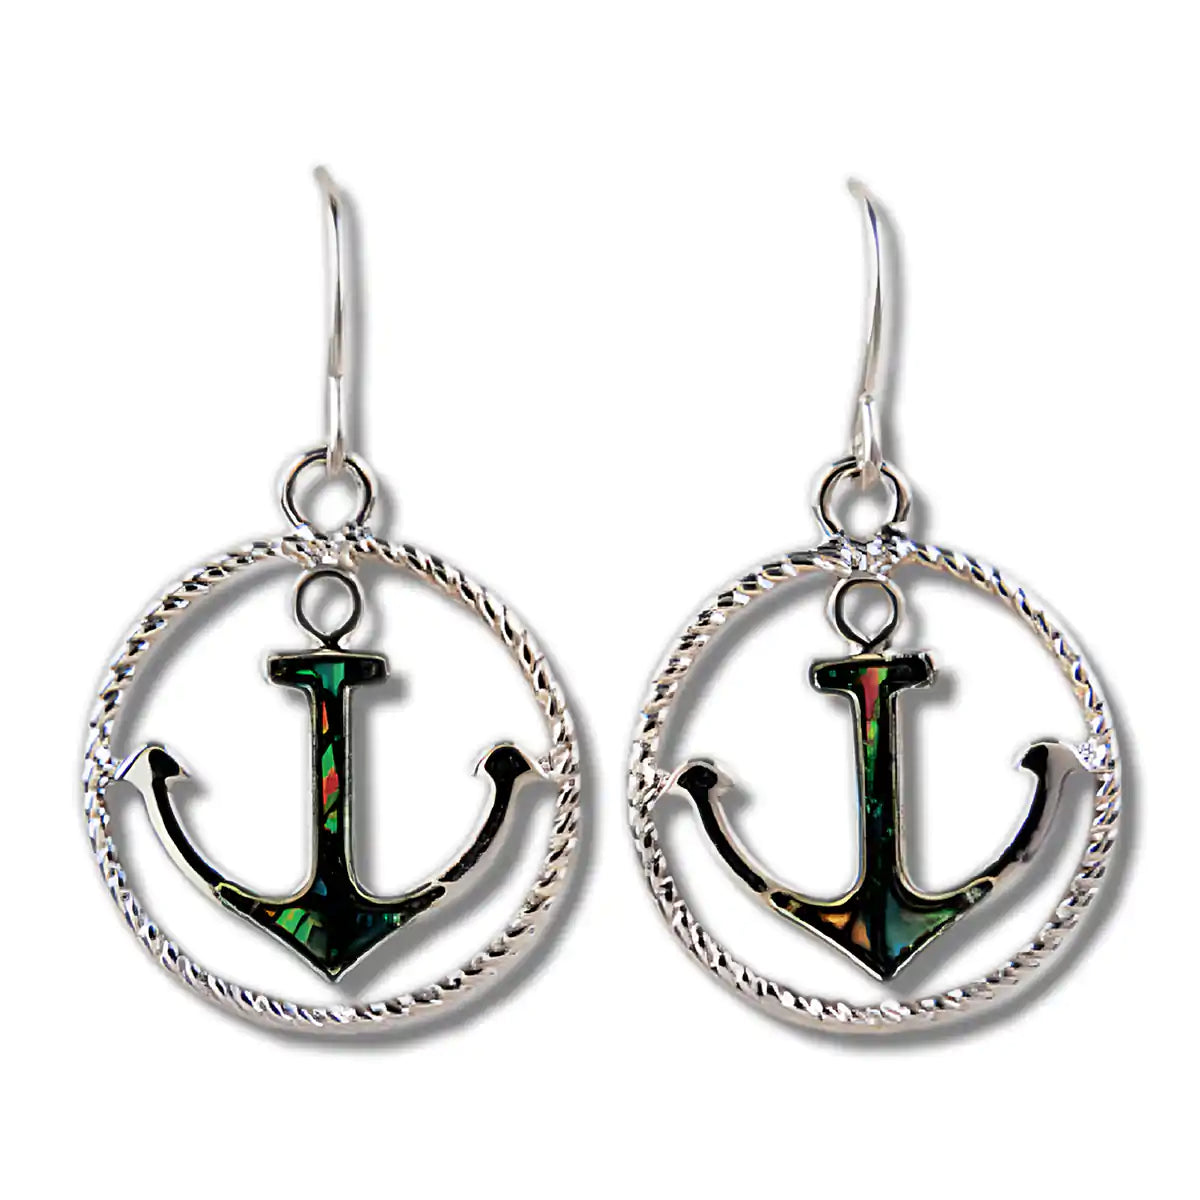 Glacier pearle anchor earrings